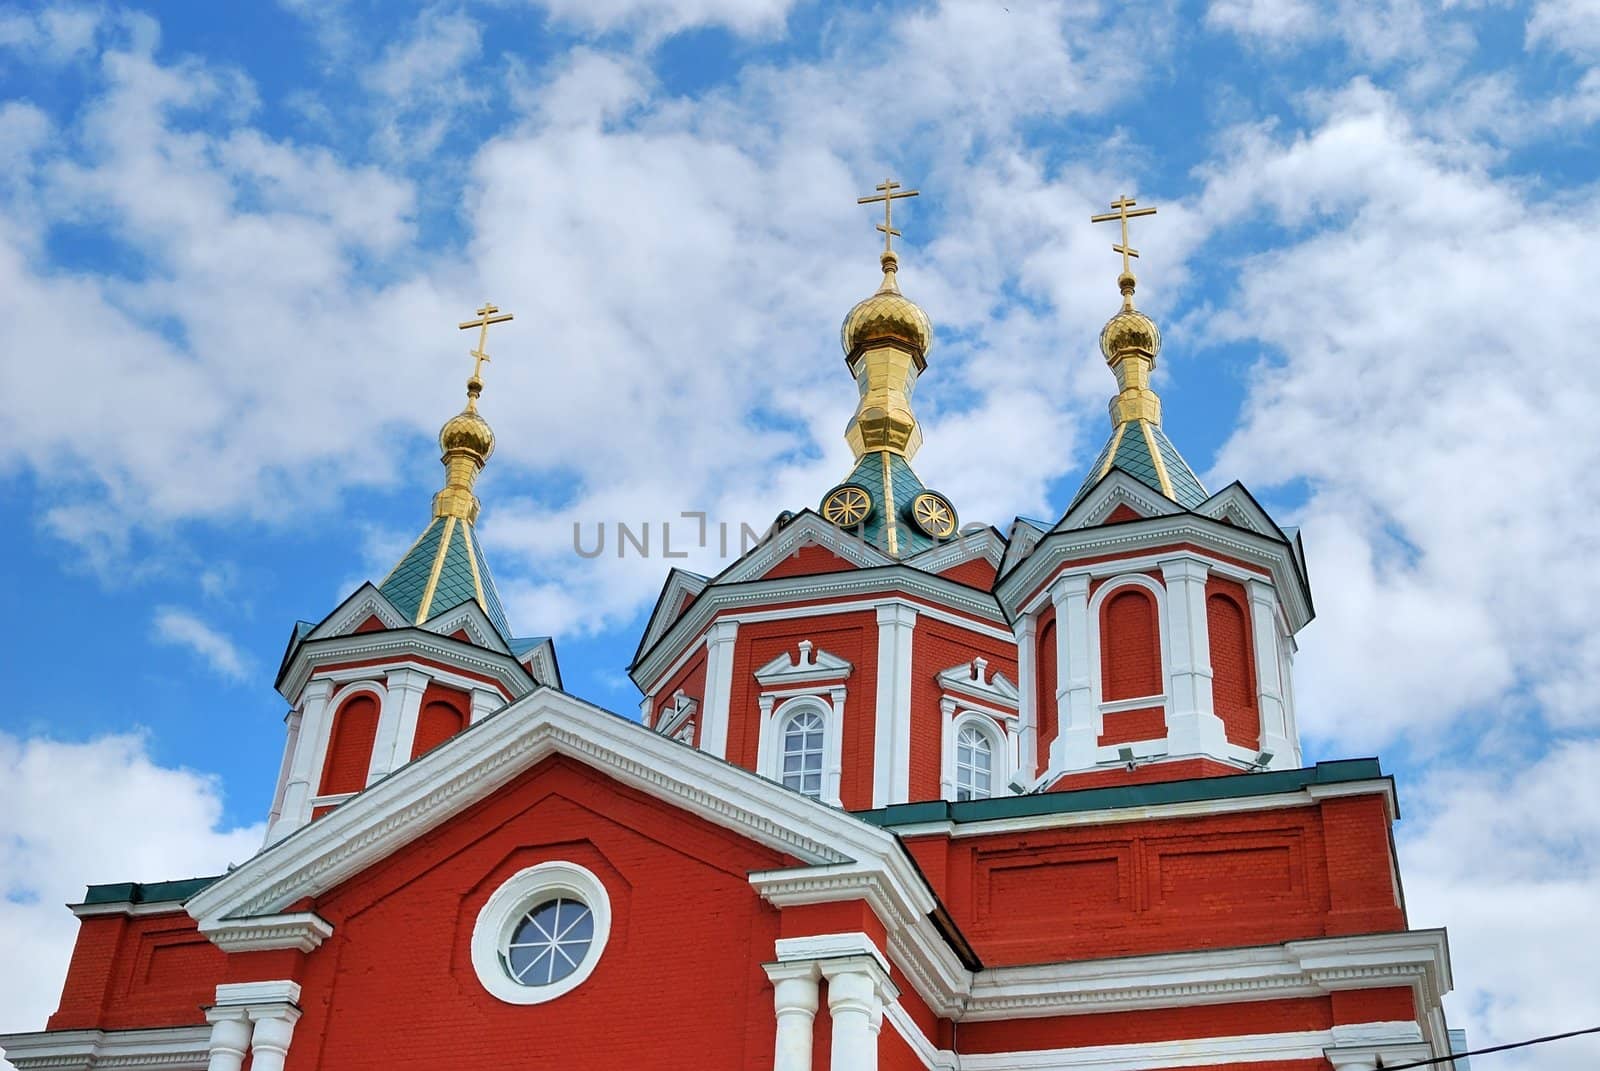 Russian orthodox church in Kolomna town near Moscow